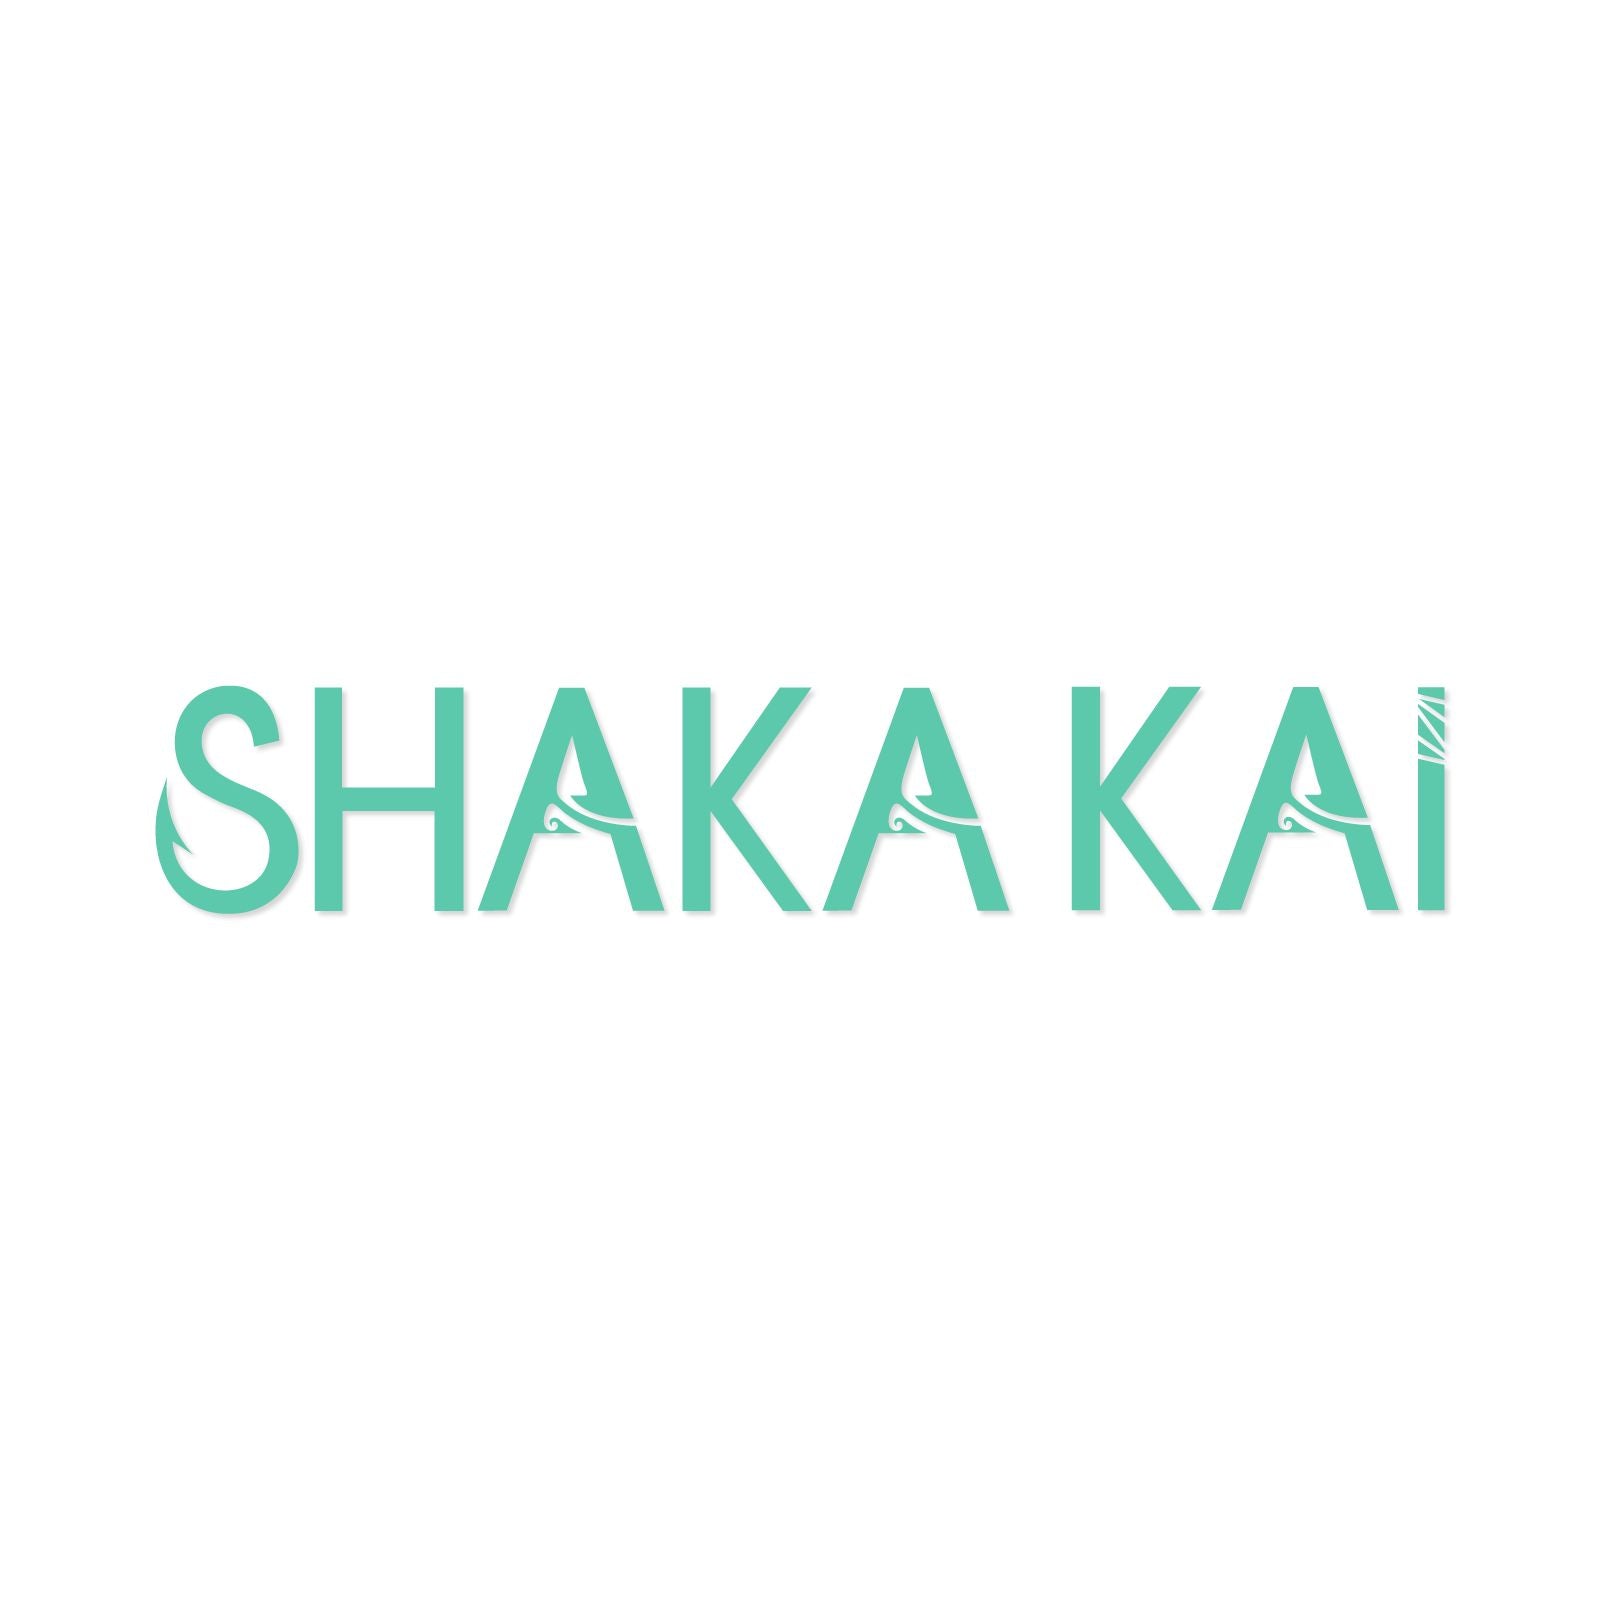 Transfer Decal Shaka Kai Logo 8.5"